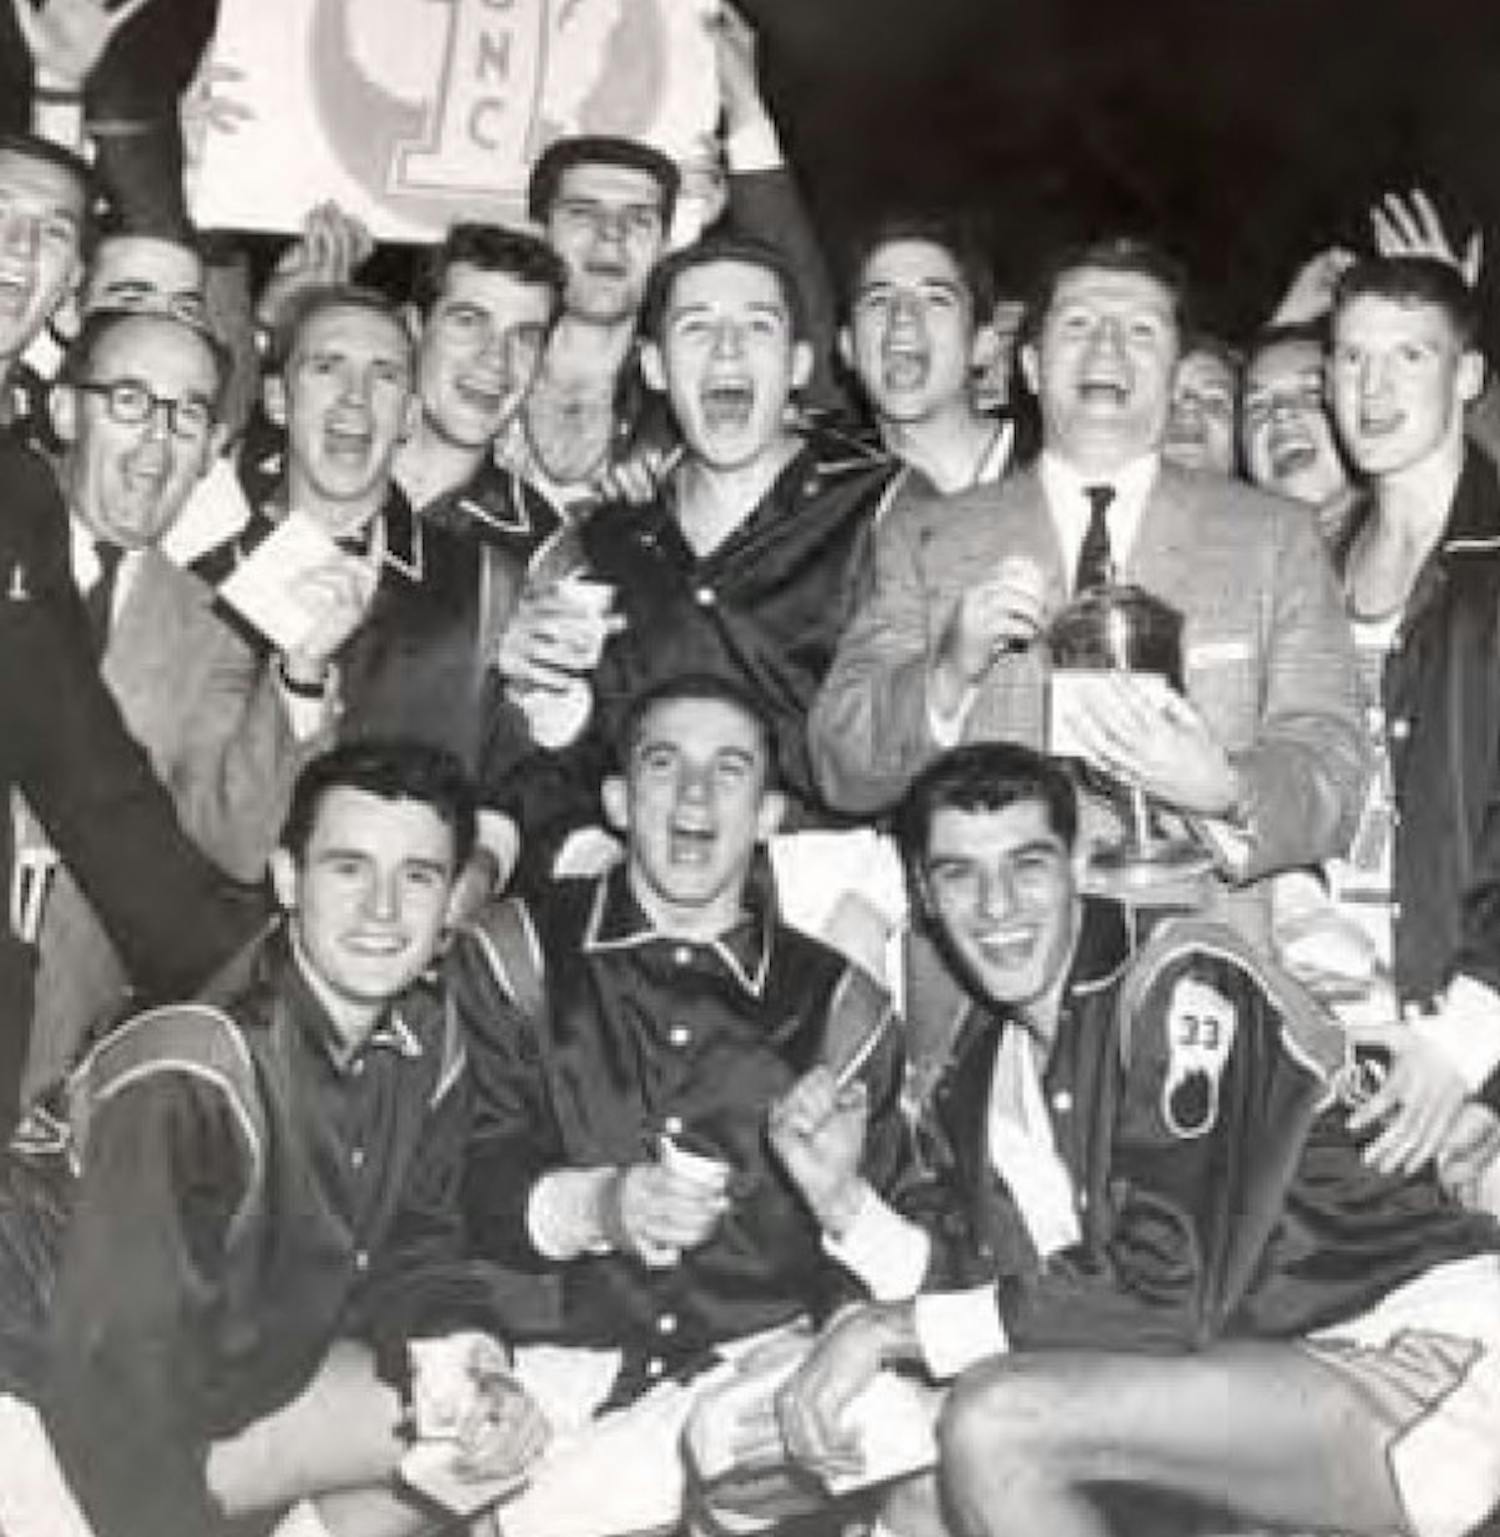 The UNC 1957 men's basketball team celebrates its win. Photo courtesy of North Carolina Collection.